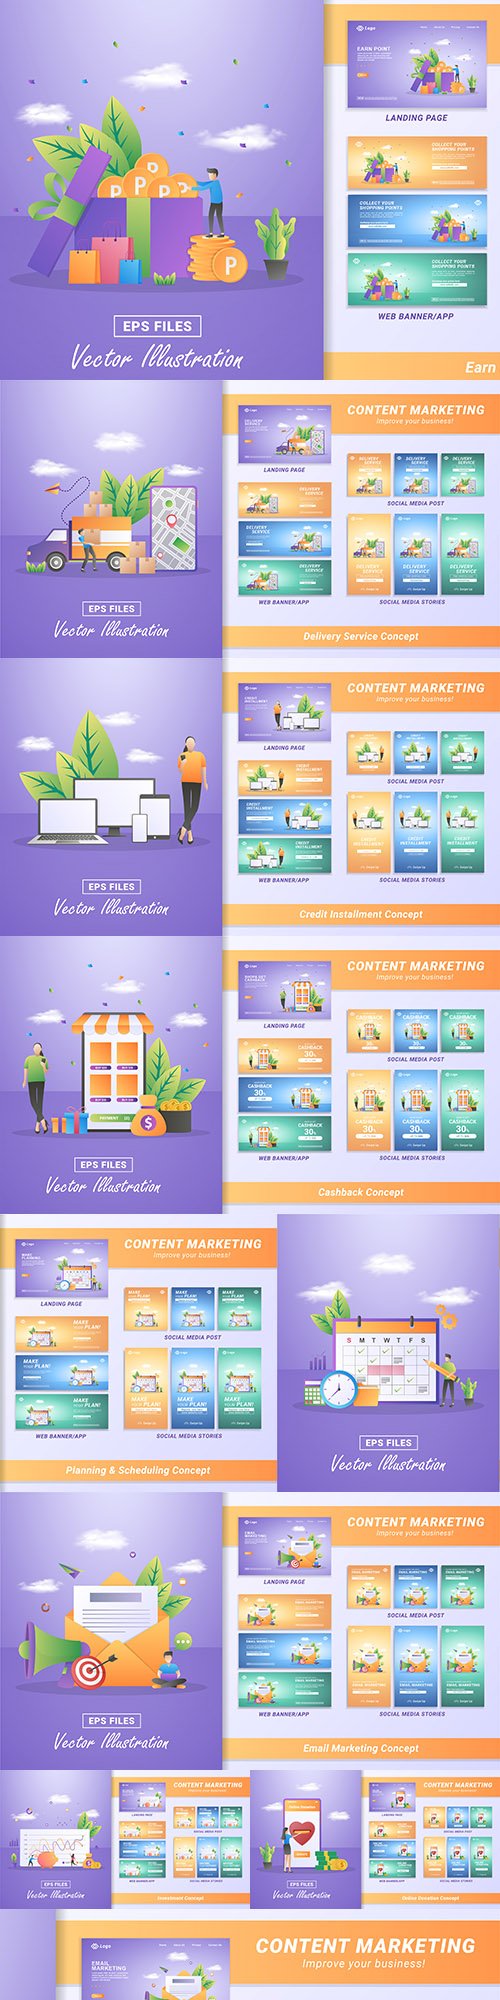 Online marketing content material design flat banner